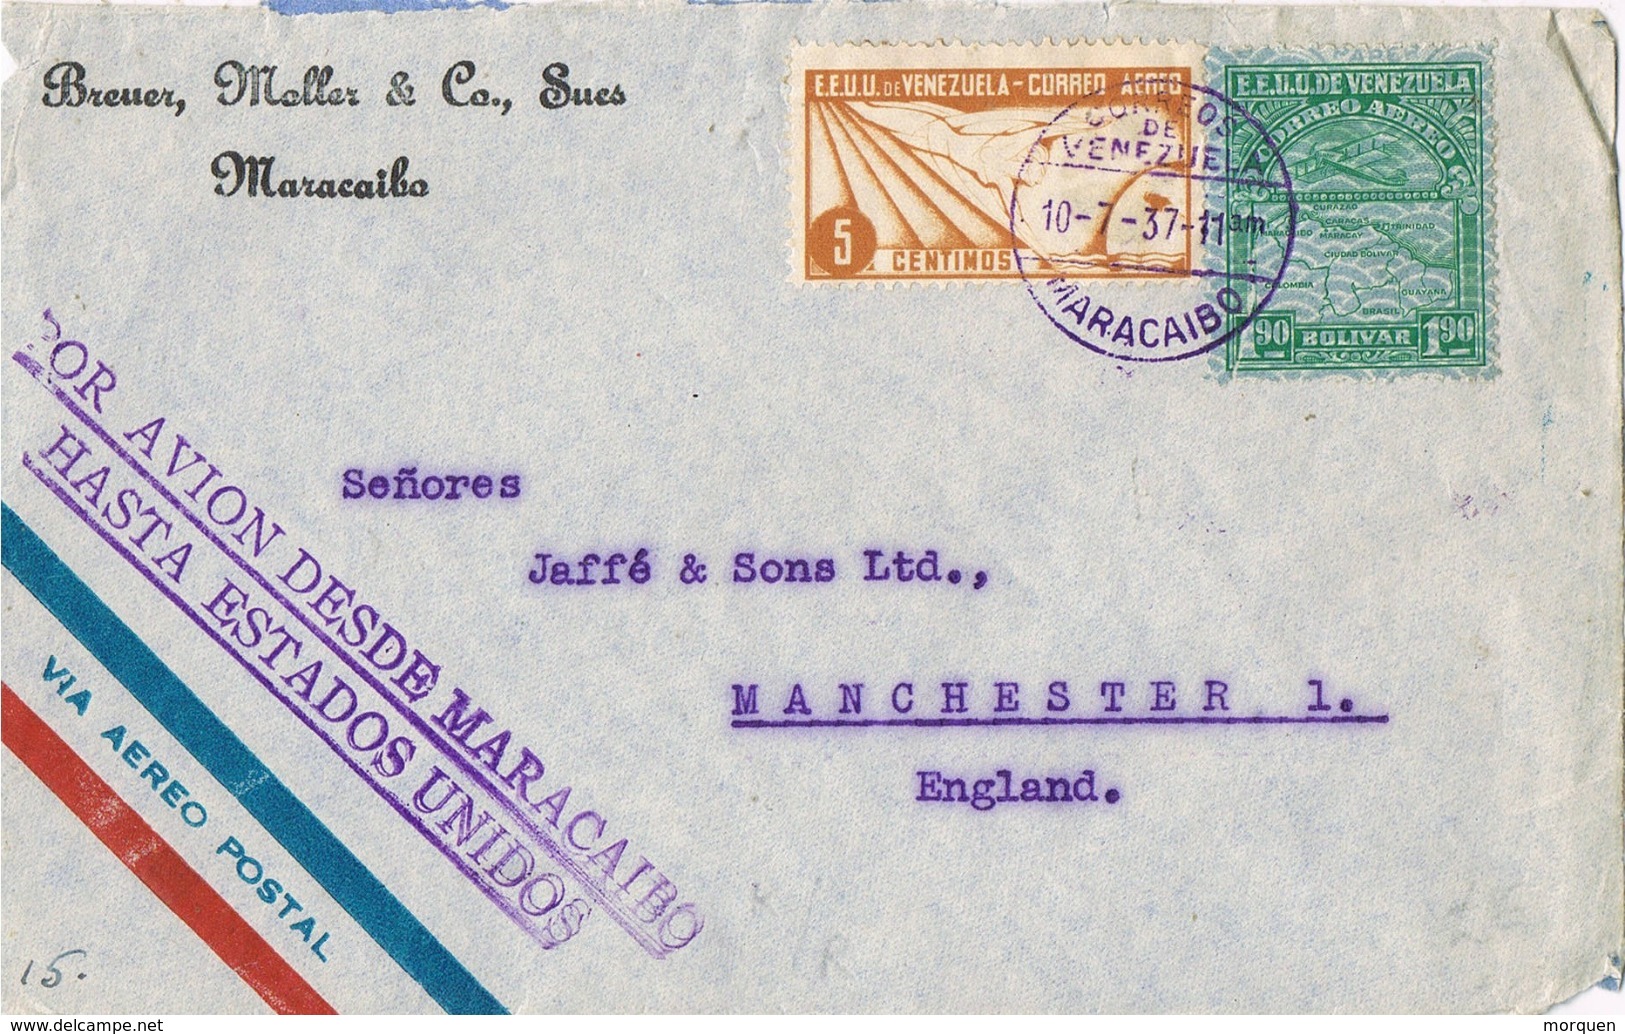 34446. Carta Aerea MARACAIBO (Venezuerla) 1937. Por Avion D Maracaibo A USA - Venezuela